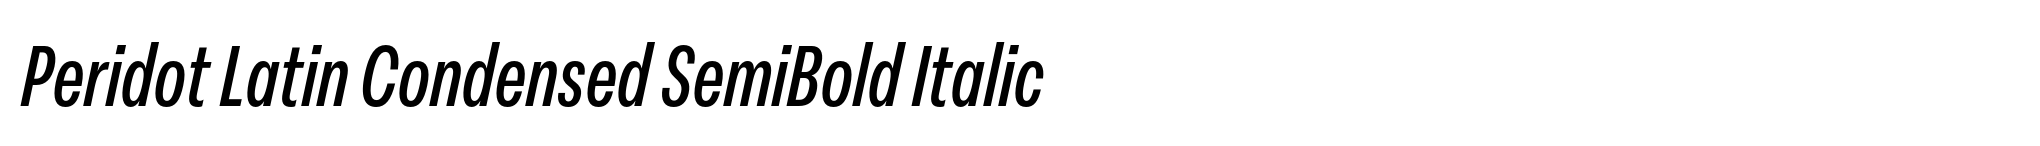 Peridot Latin Condensed SemiBold Italic image